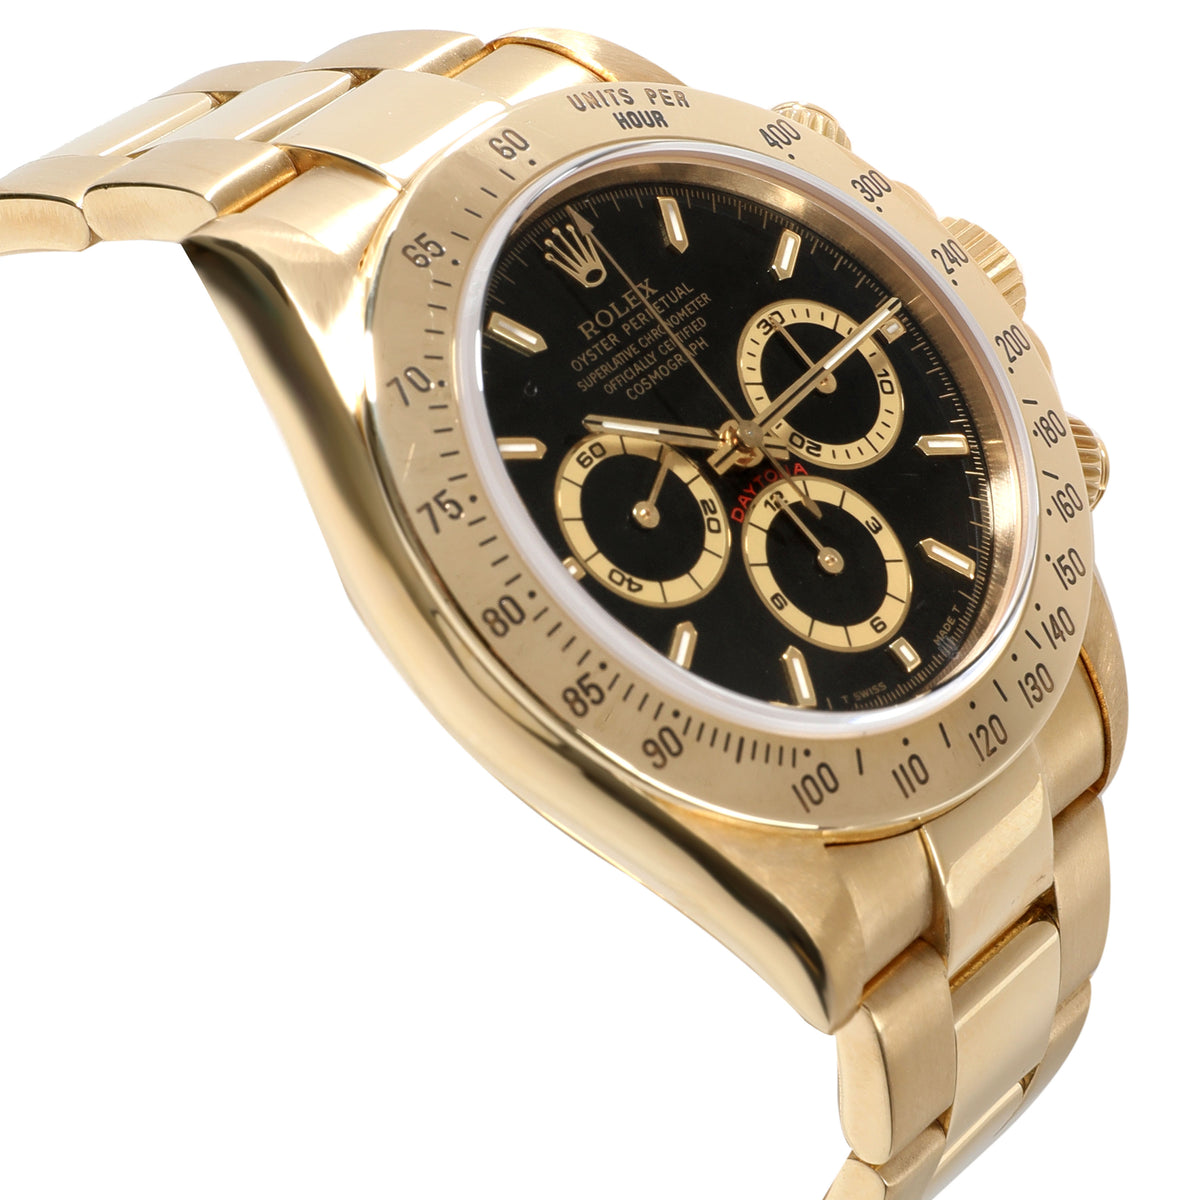 Rolex Daytona 16528 Men's Watch in 18kt Yellow Gold